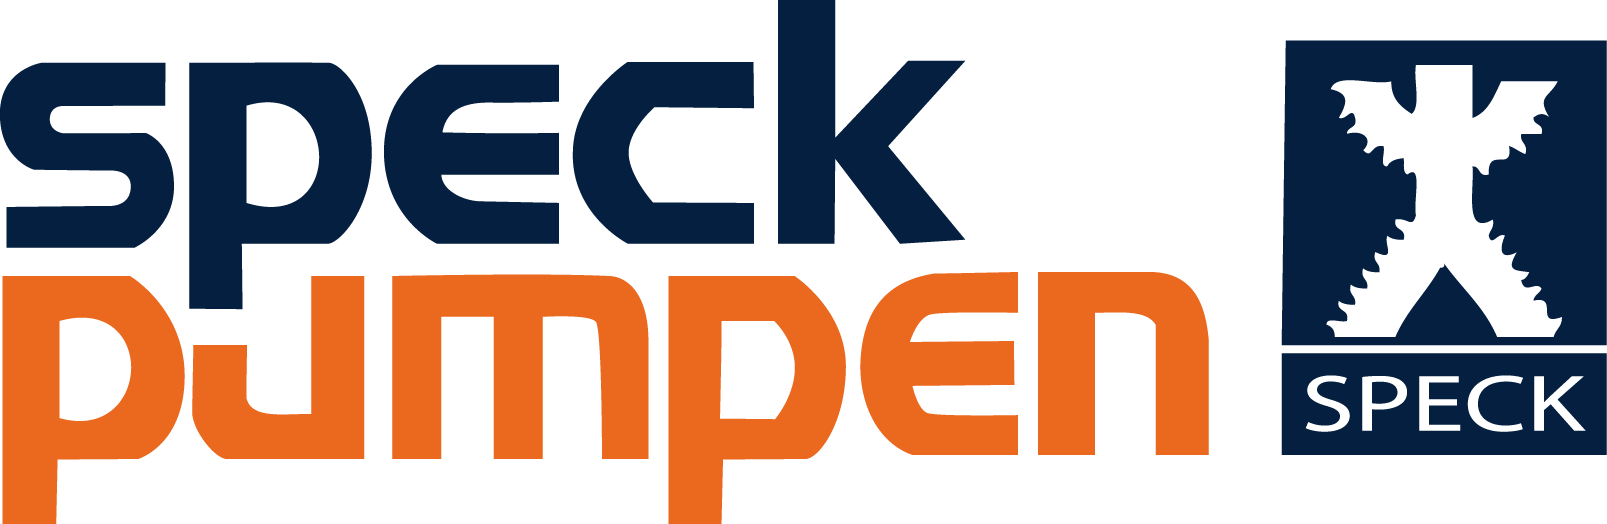 Speck Logo